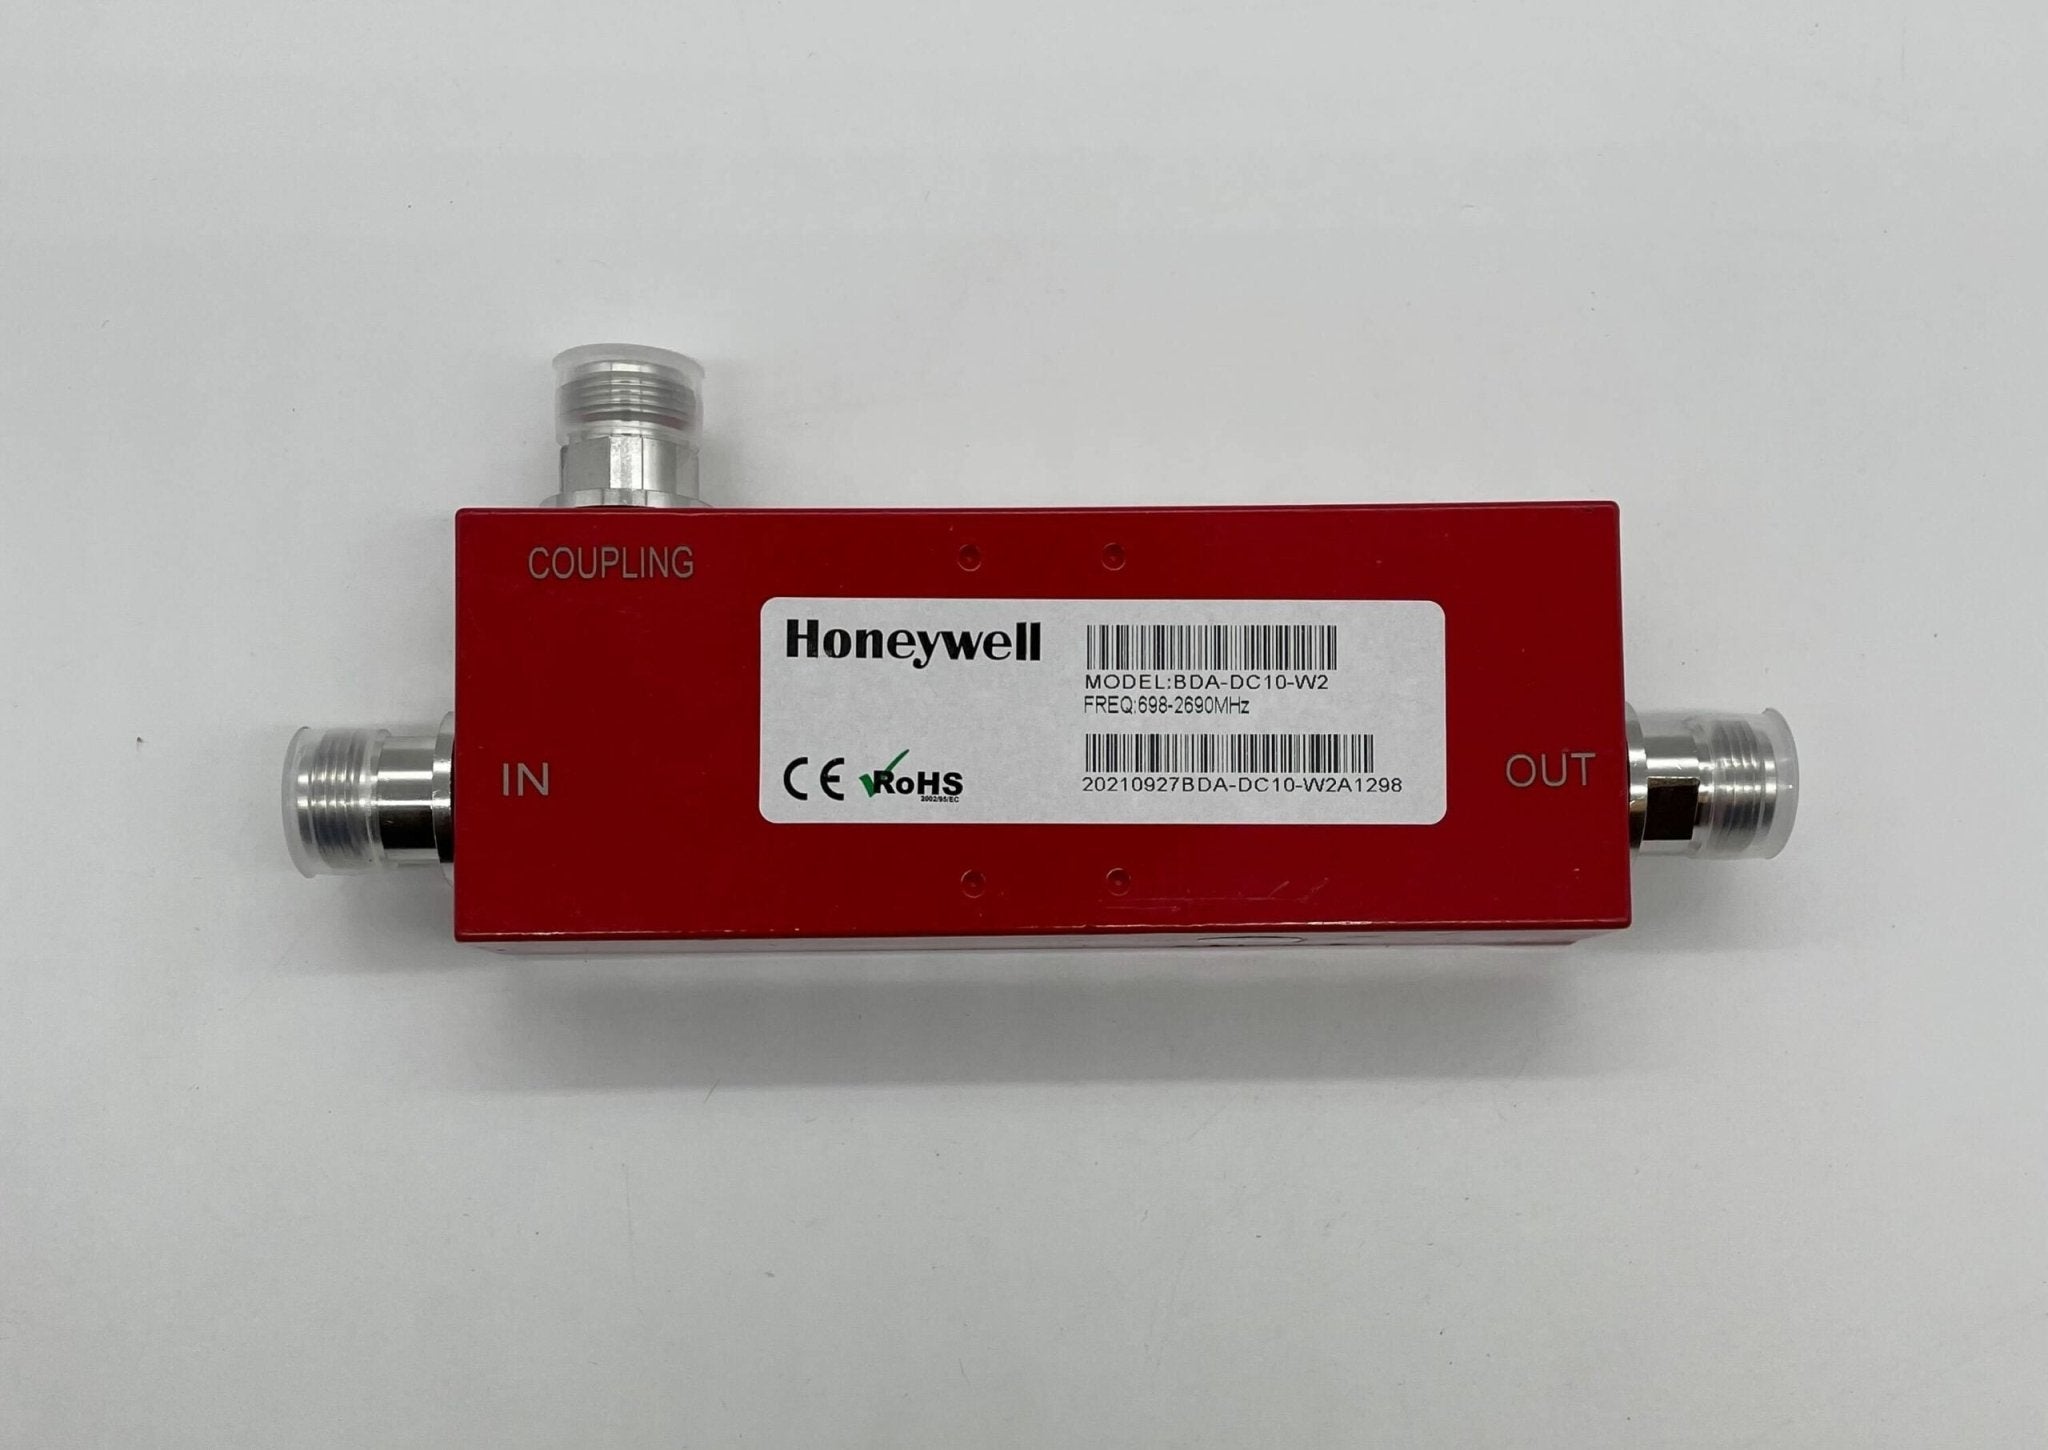 Honeywell BDA-DC10-W2 - The Fire Alarm Supplier